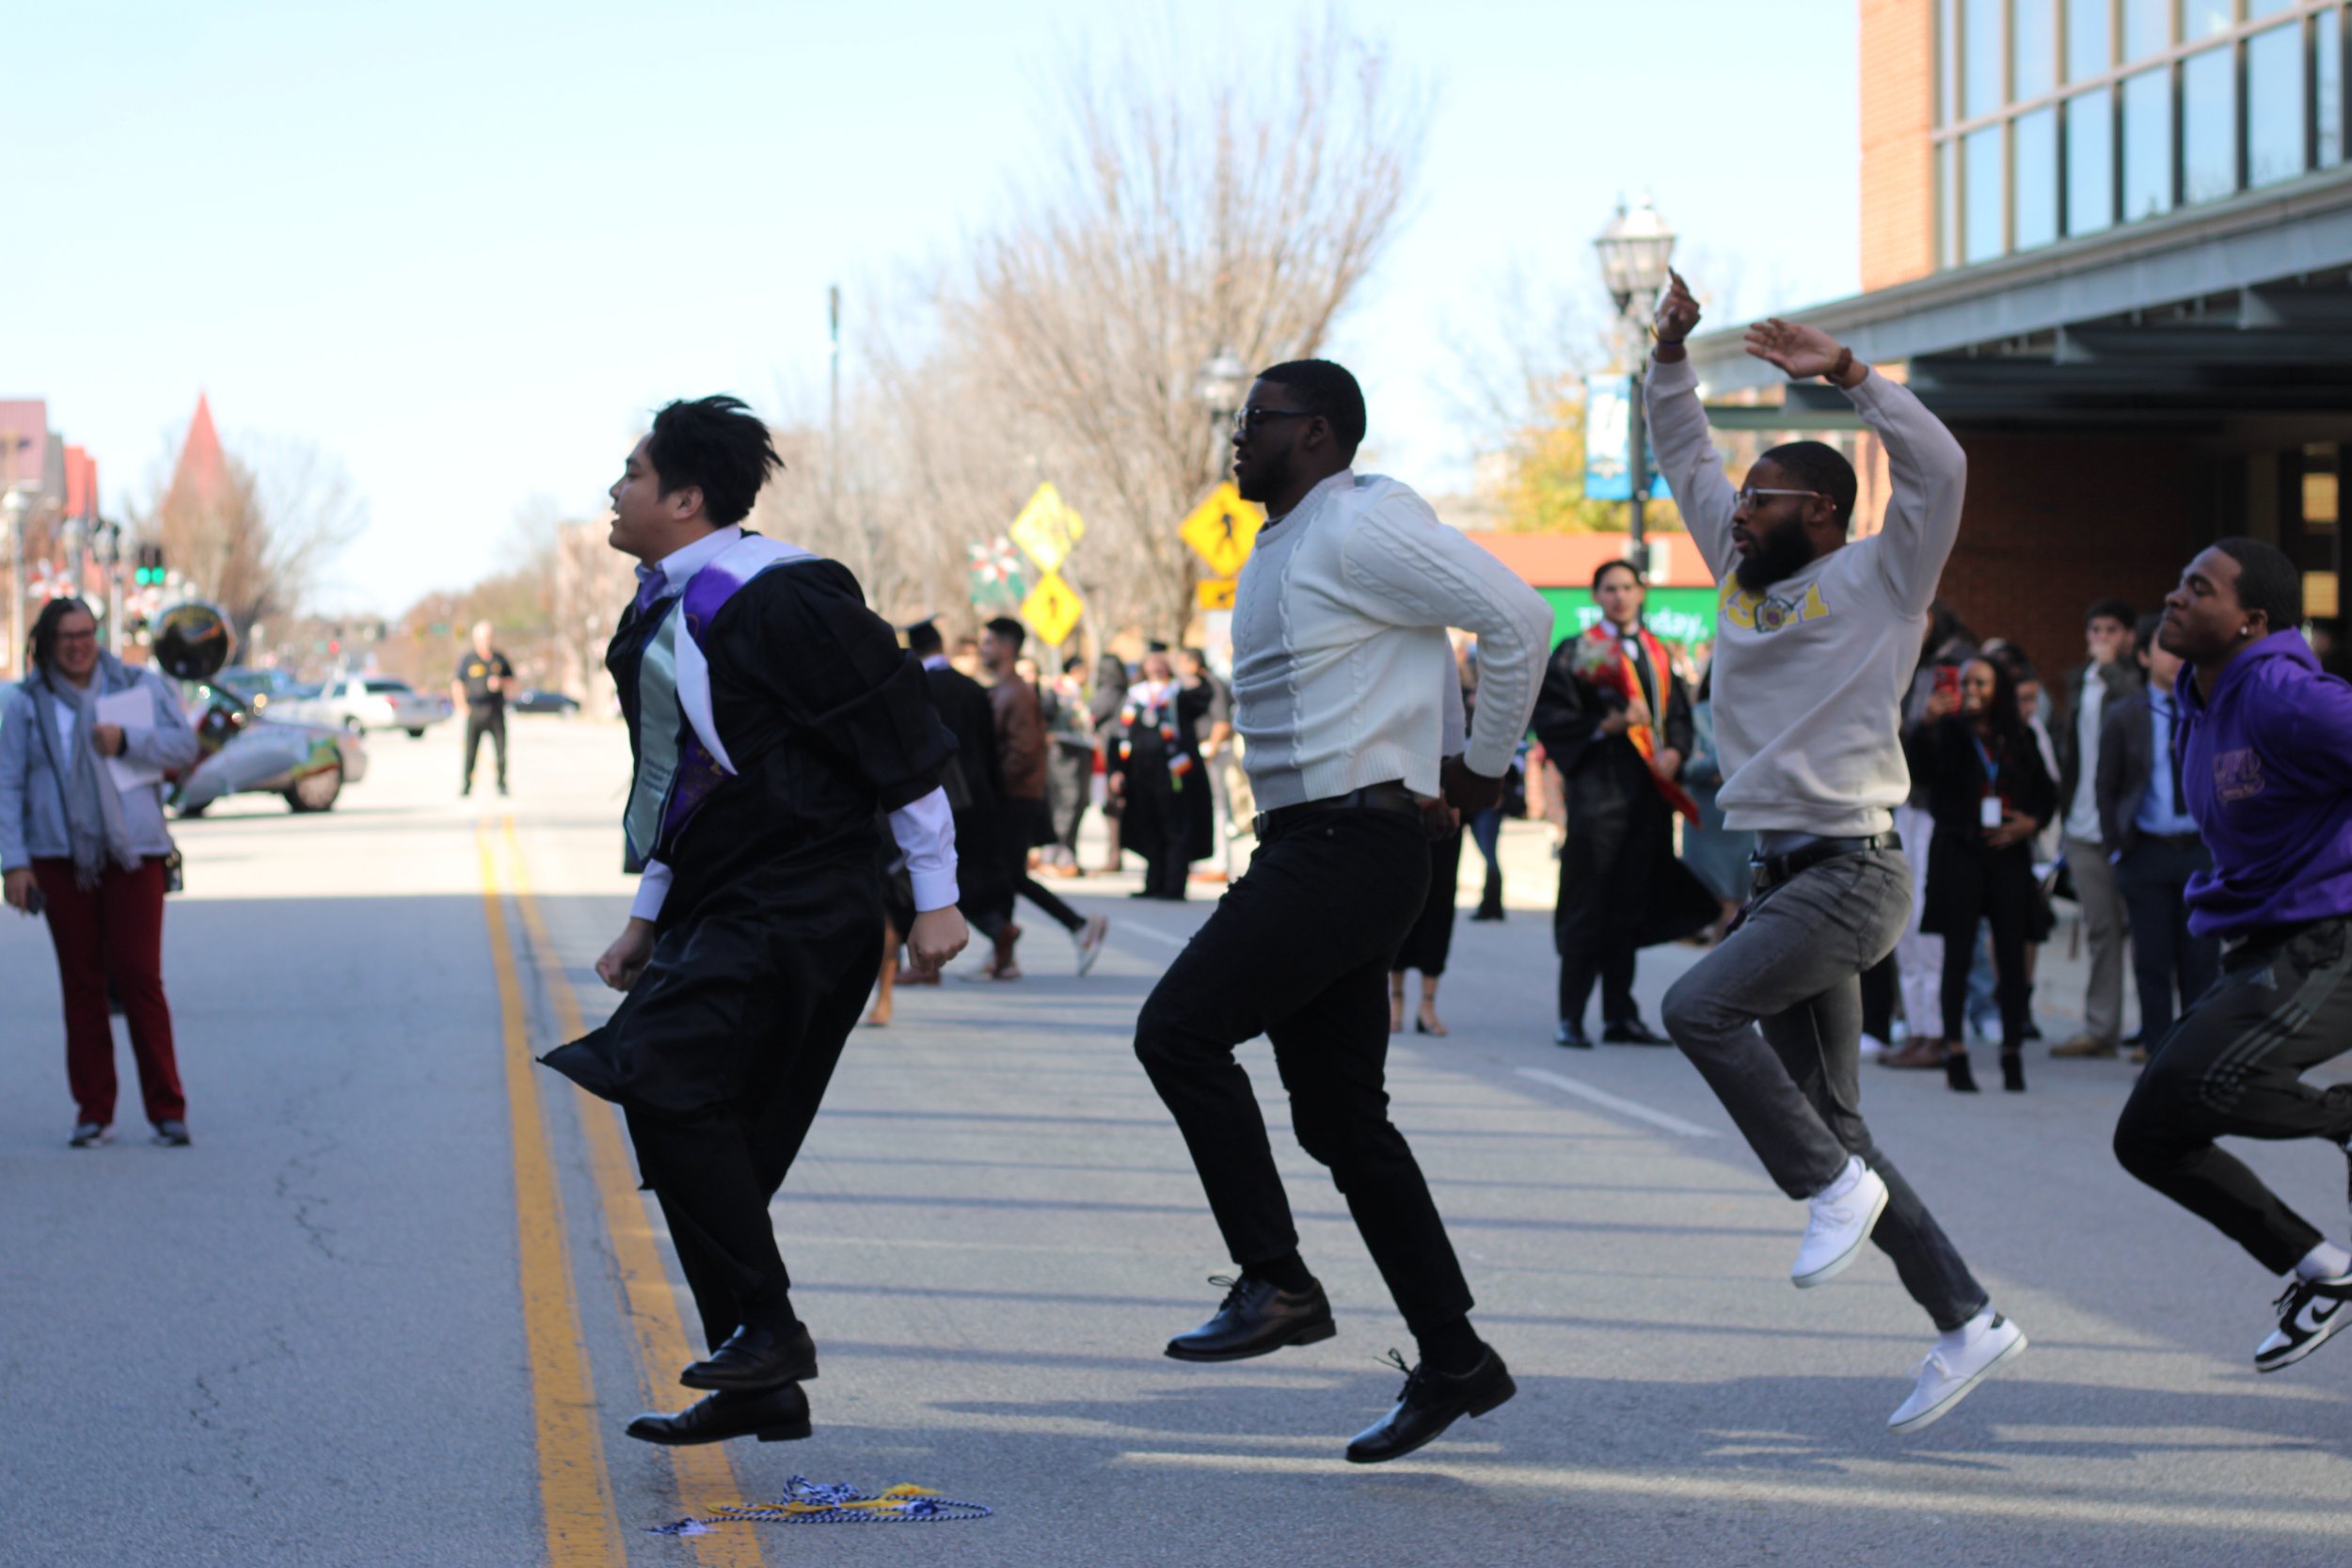  Fraternity members celebrate in the street after graduation.  (photo by Rakiyah Lenon)  